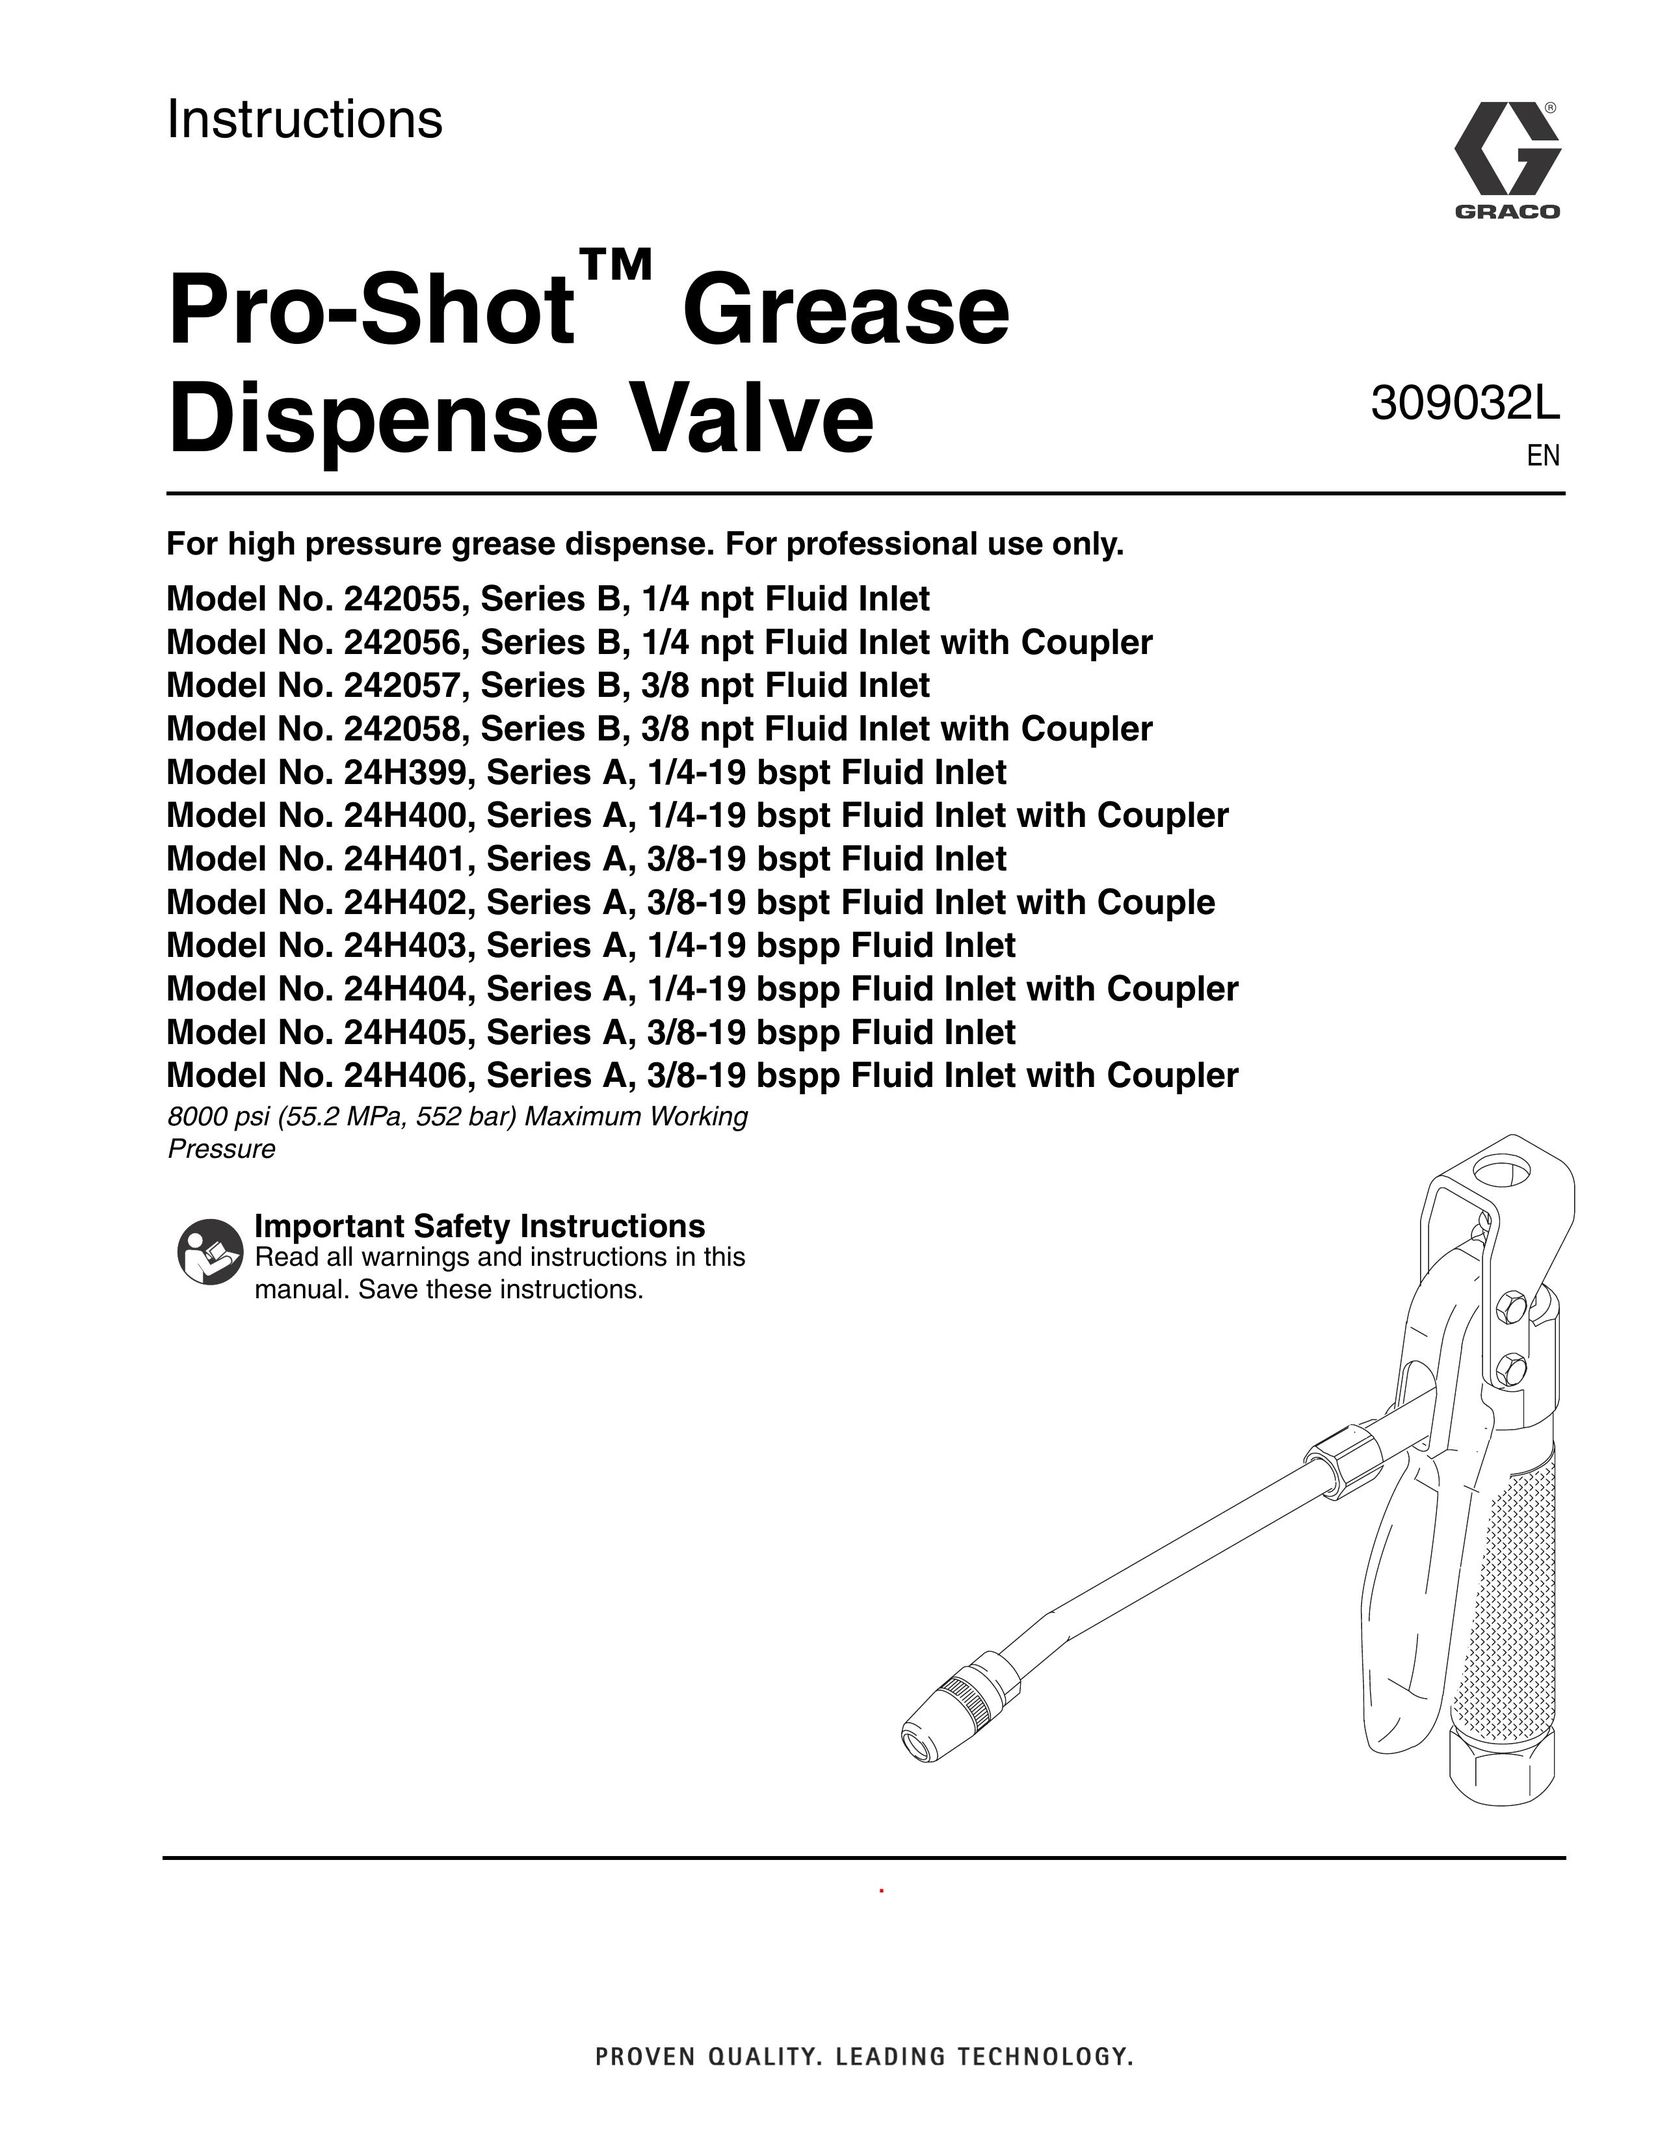 Graco 24H402 Glue Gun User Manual